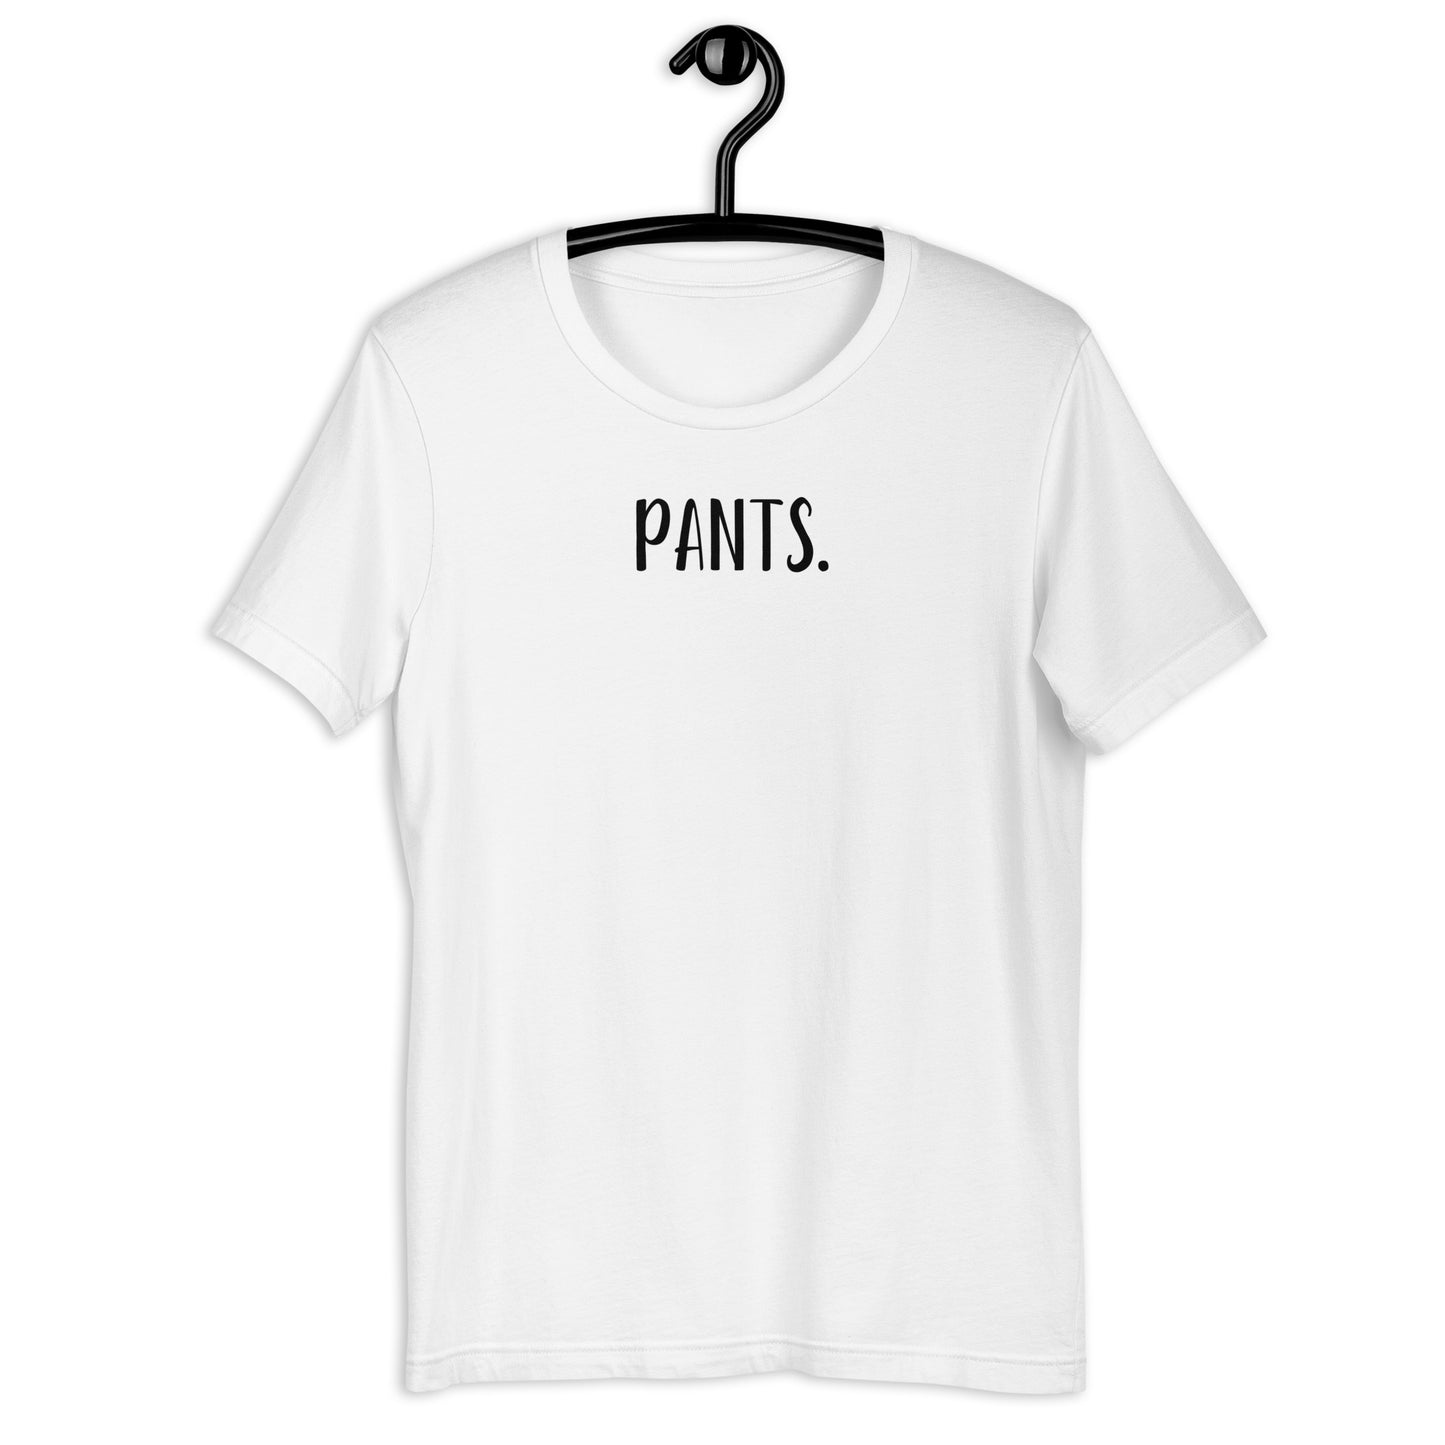 Pants. Shirt